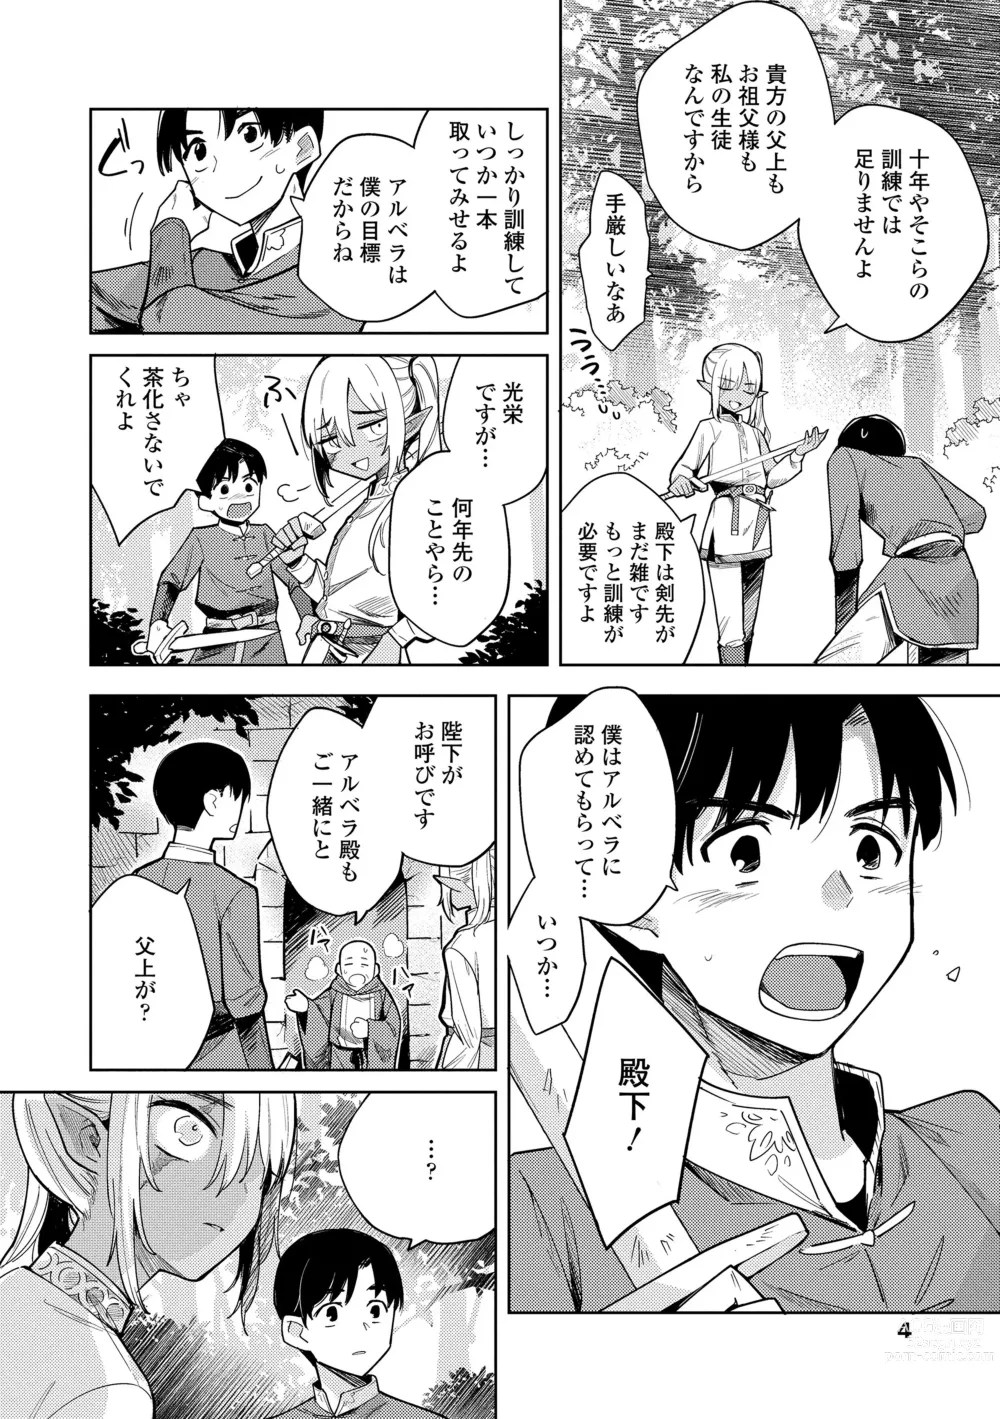 Page 6 of manga Adabana No Garuden